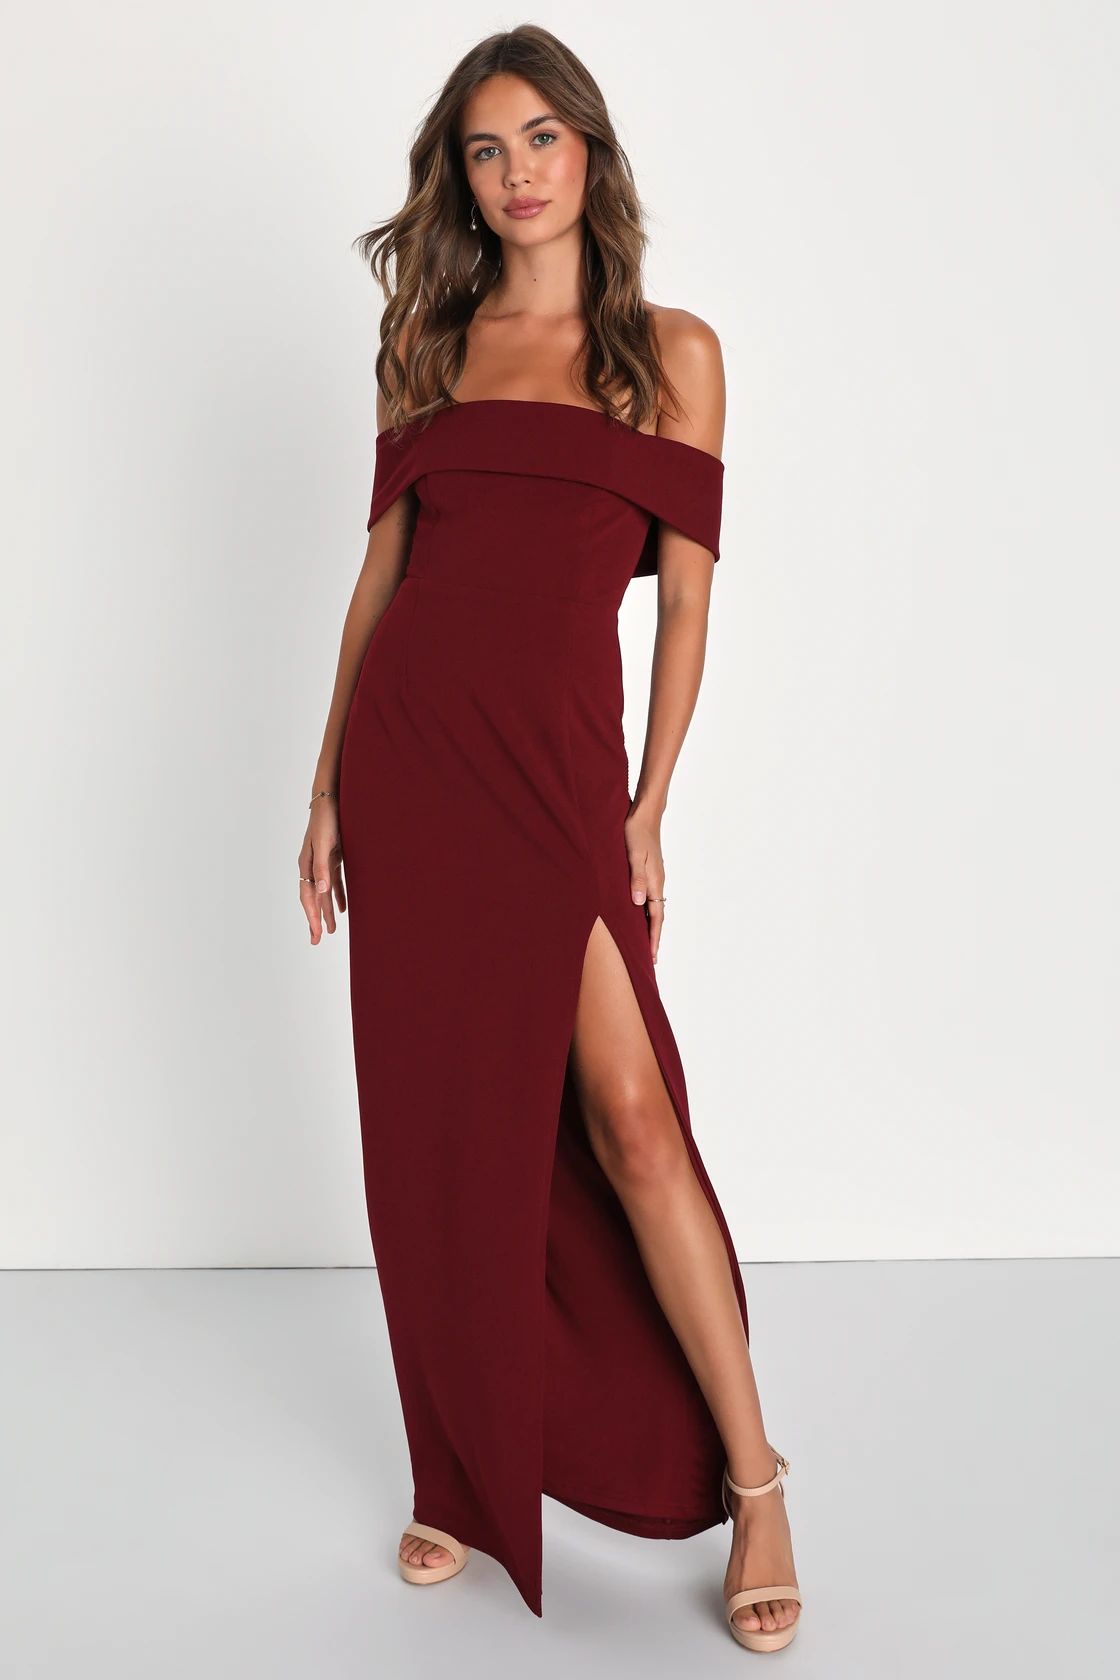 Enchanting Romantic Burgundy Off-the-Shoulder Maxi Dress | Lulus (US)